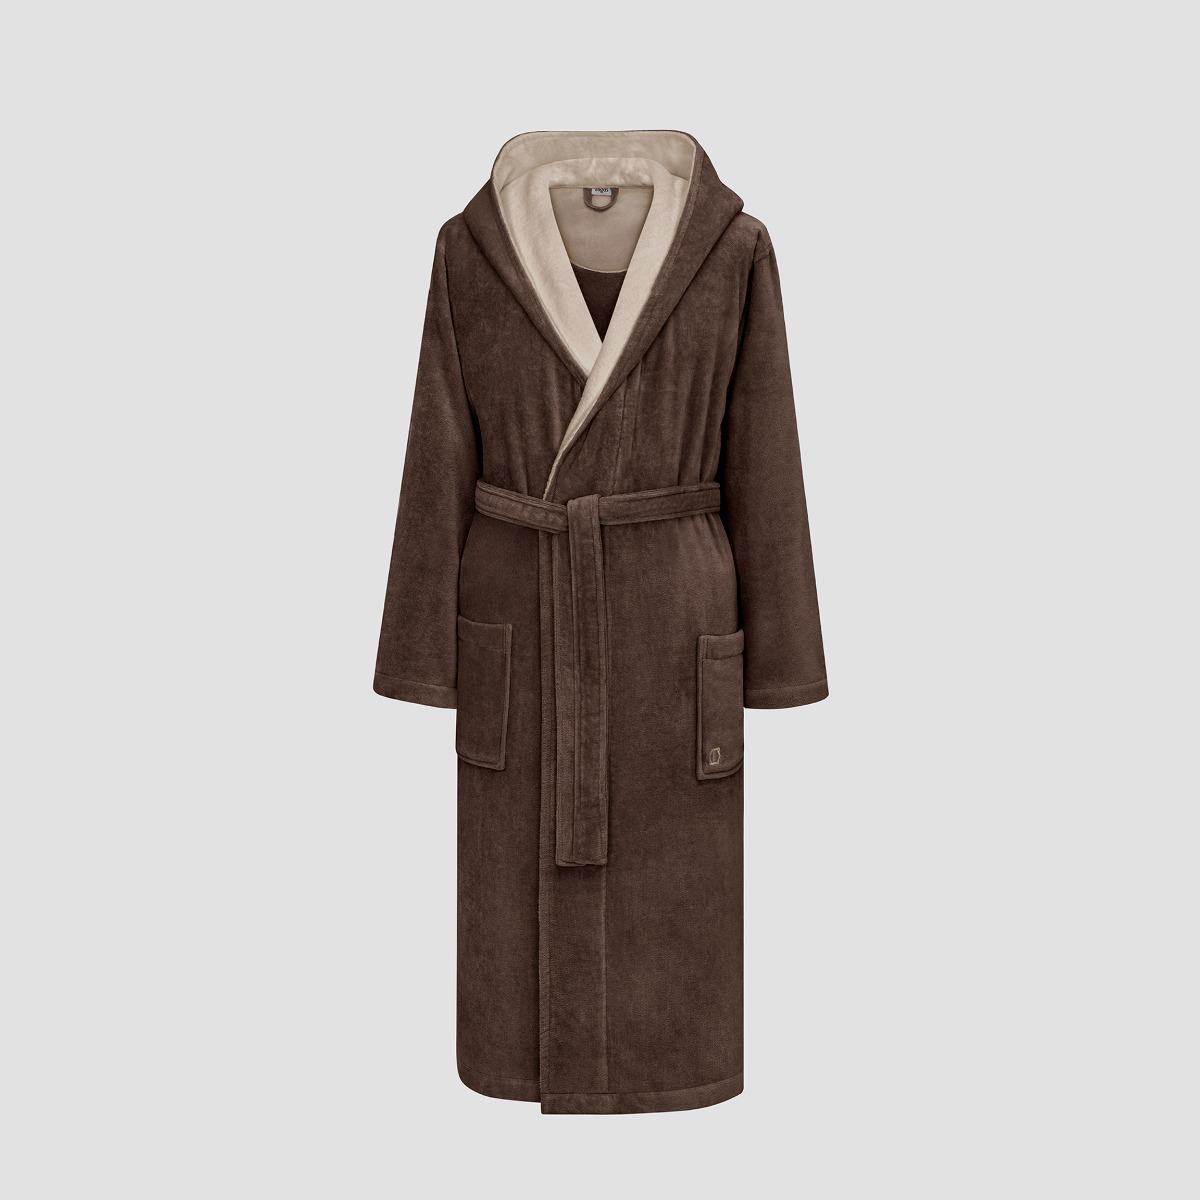 Халат Togas Арт Лайн коричневый с бежевым XL(52) халат togas арт лайн коричневый с белым м 48